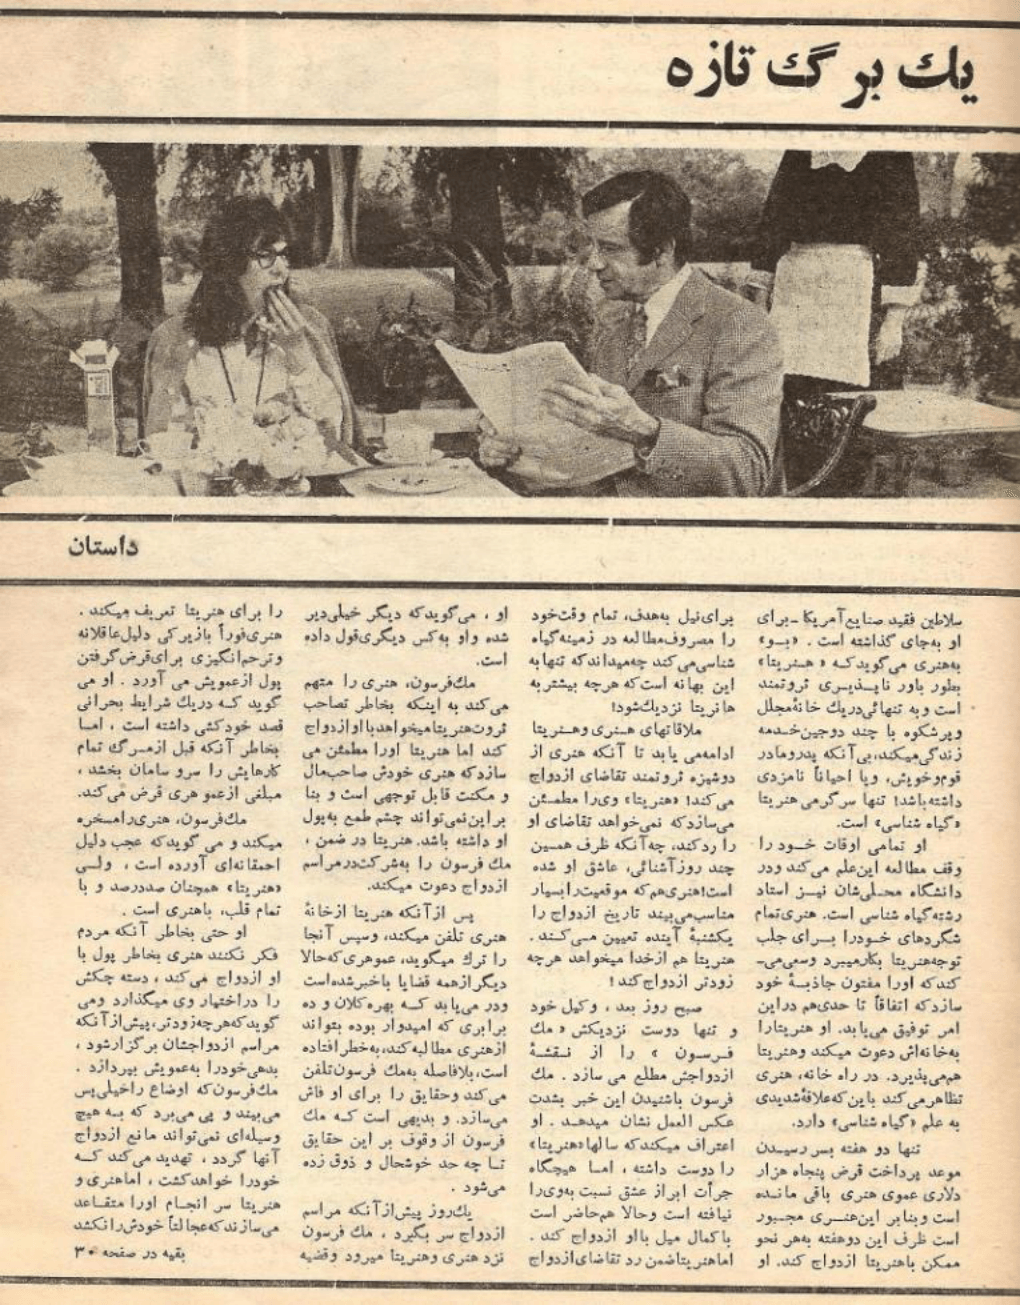 Cinema Star (April 29, 1971) - KHAJISTAN™